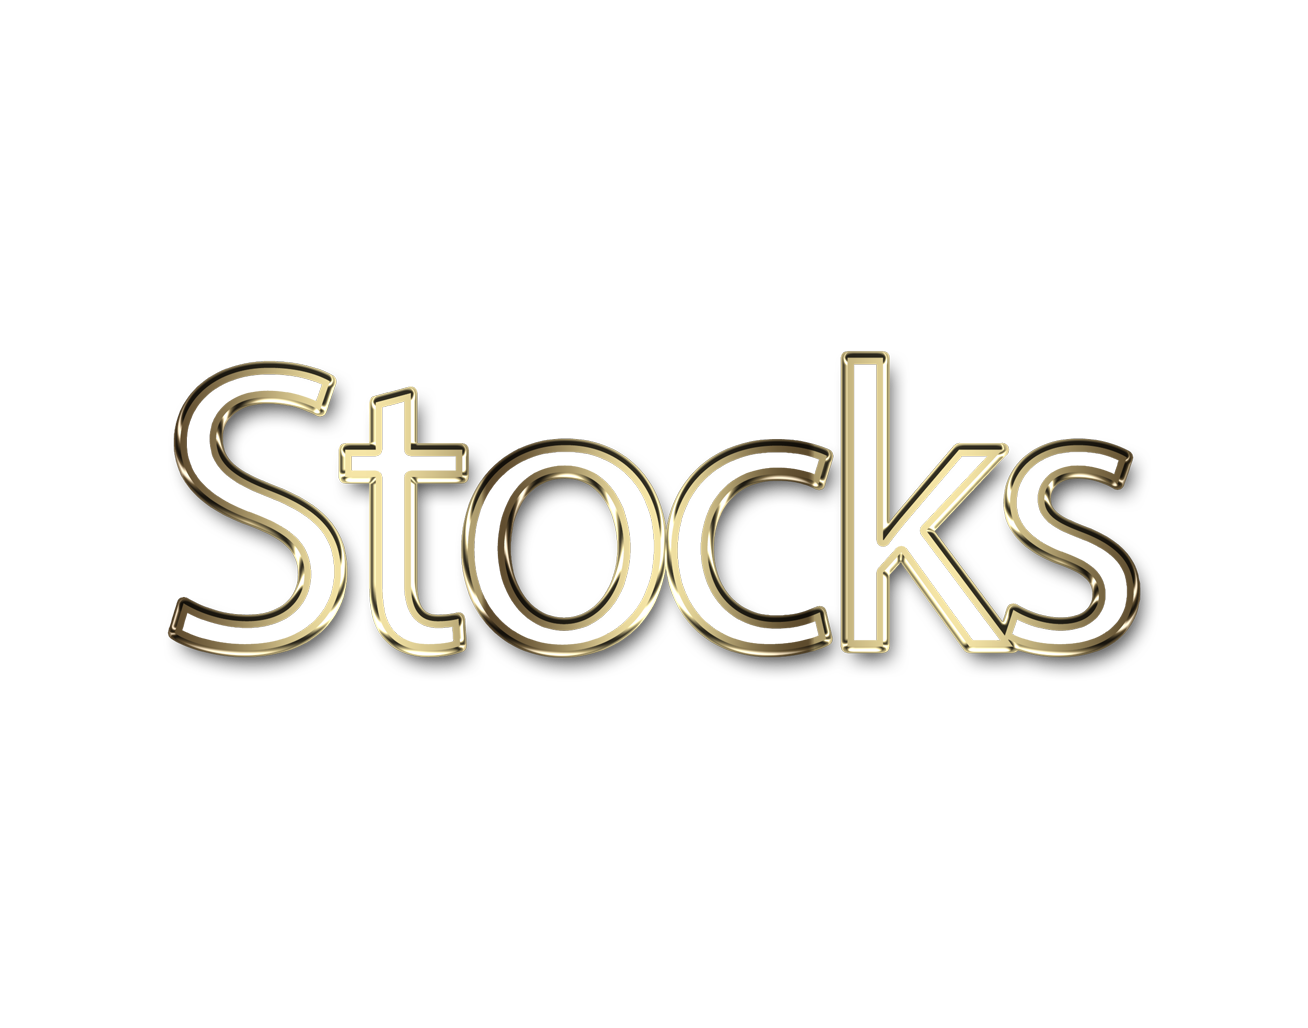 Stocks png, word Stocks png, Stocks word png, Stocks text png, Stocks letters png, Stocks word art typography PNG images, transparent png